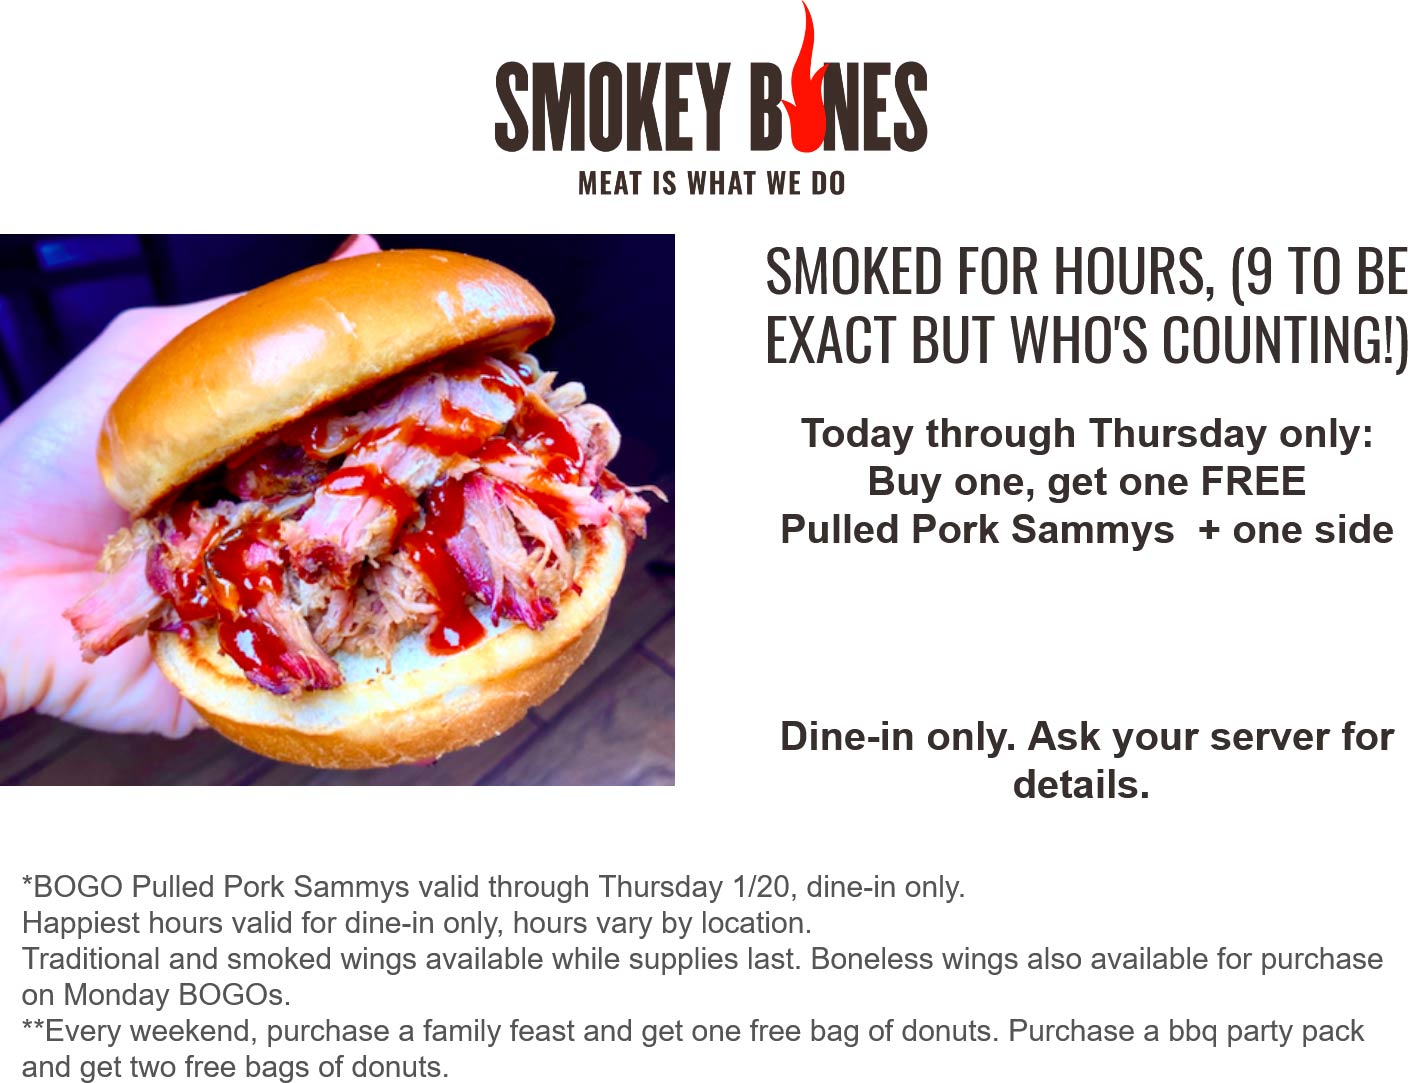 Smokey Bones restaurants Coupon  Second pulled pork sandwich free at Smokey Bones restaurants #smokeybones 